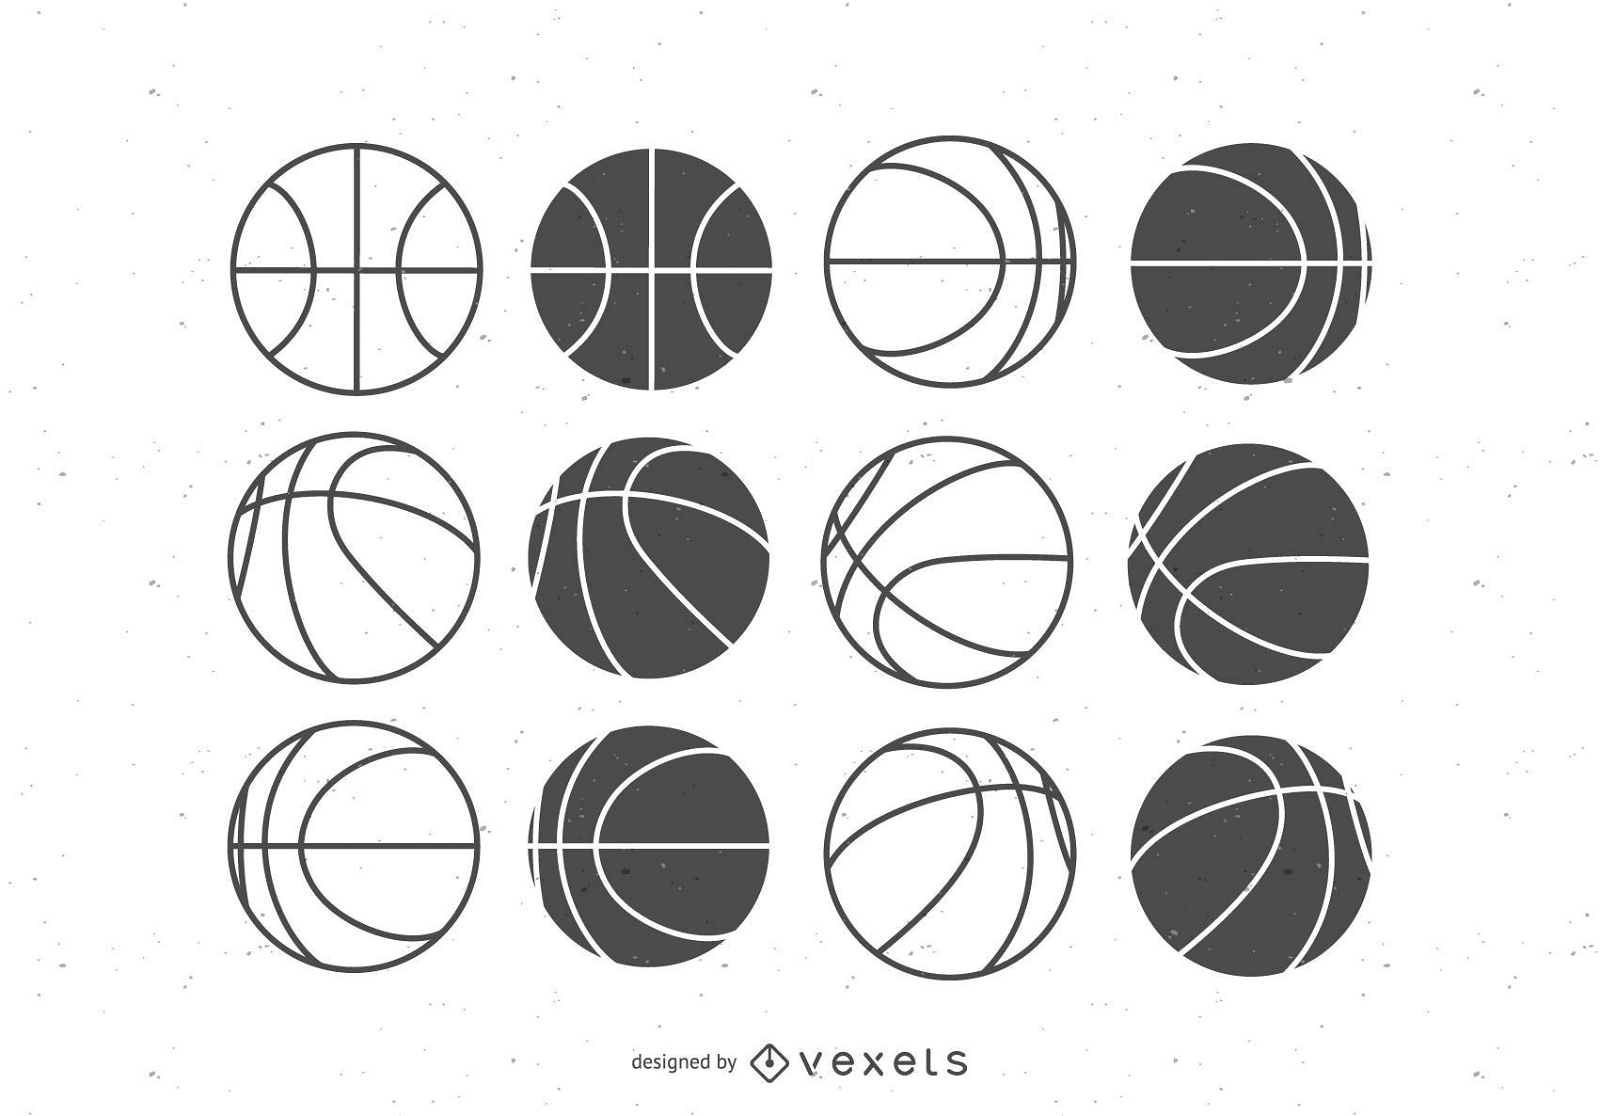 Basketballbälle flach eingestellt